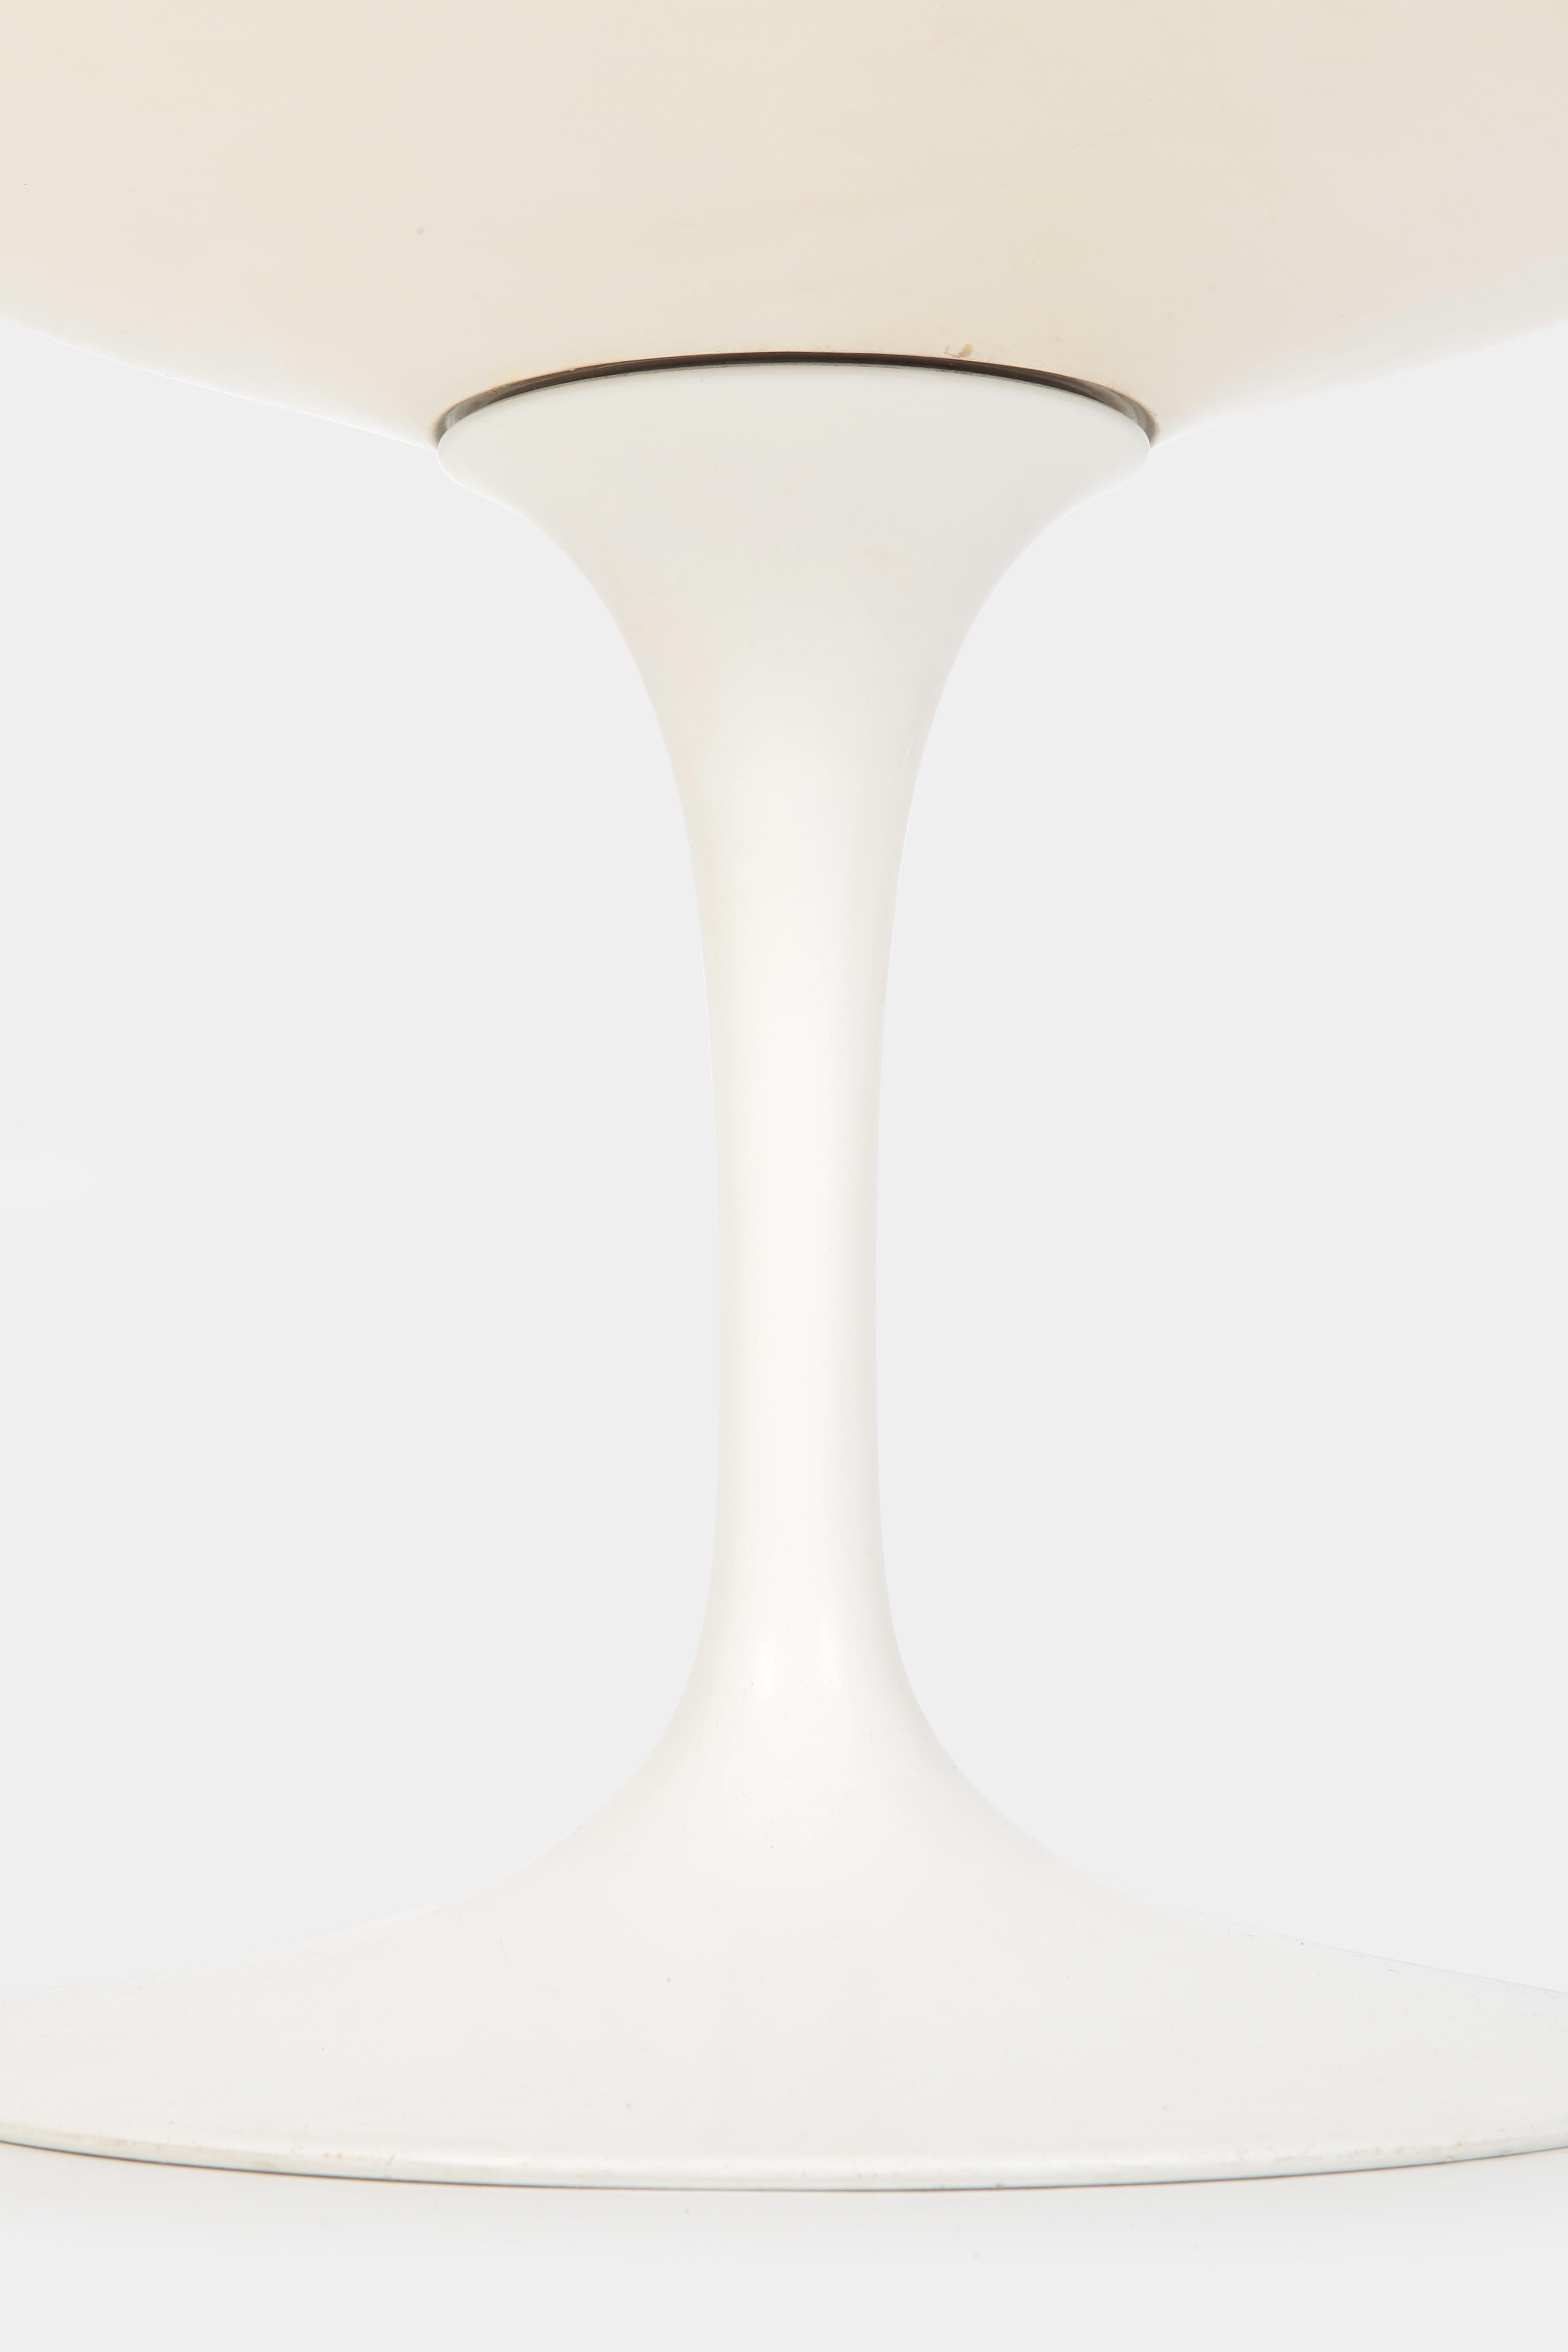 Eero Saarinen “Tulip” Chair Knoll International, 1960s 3